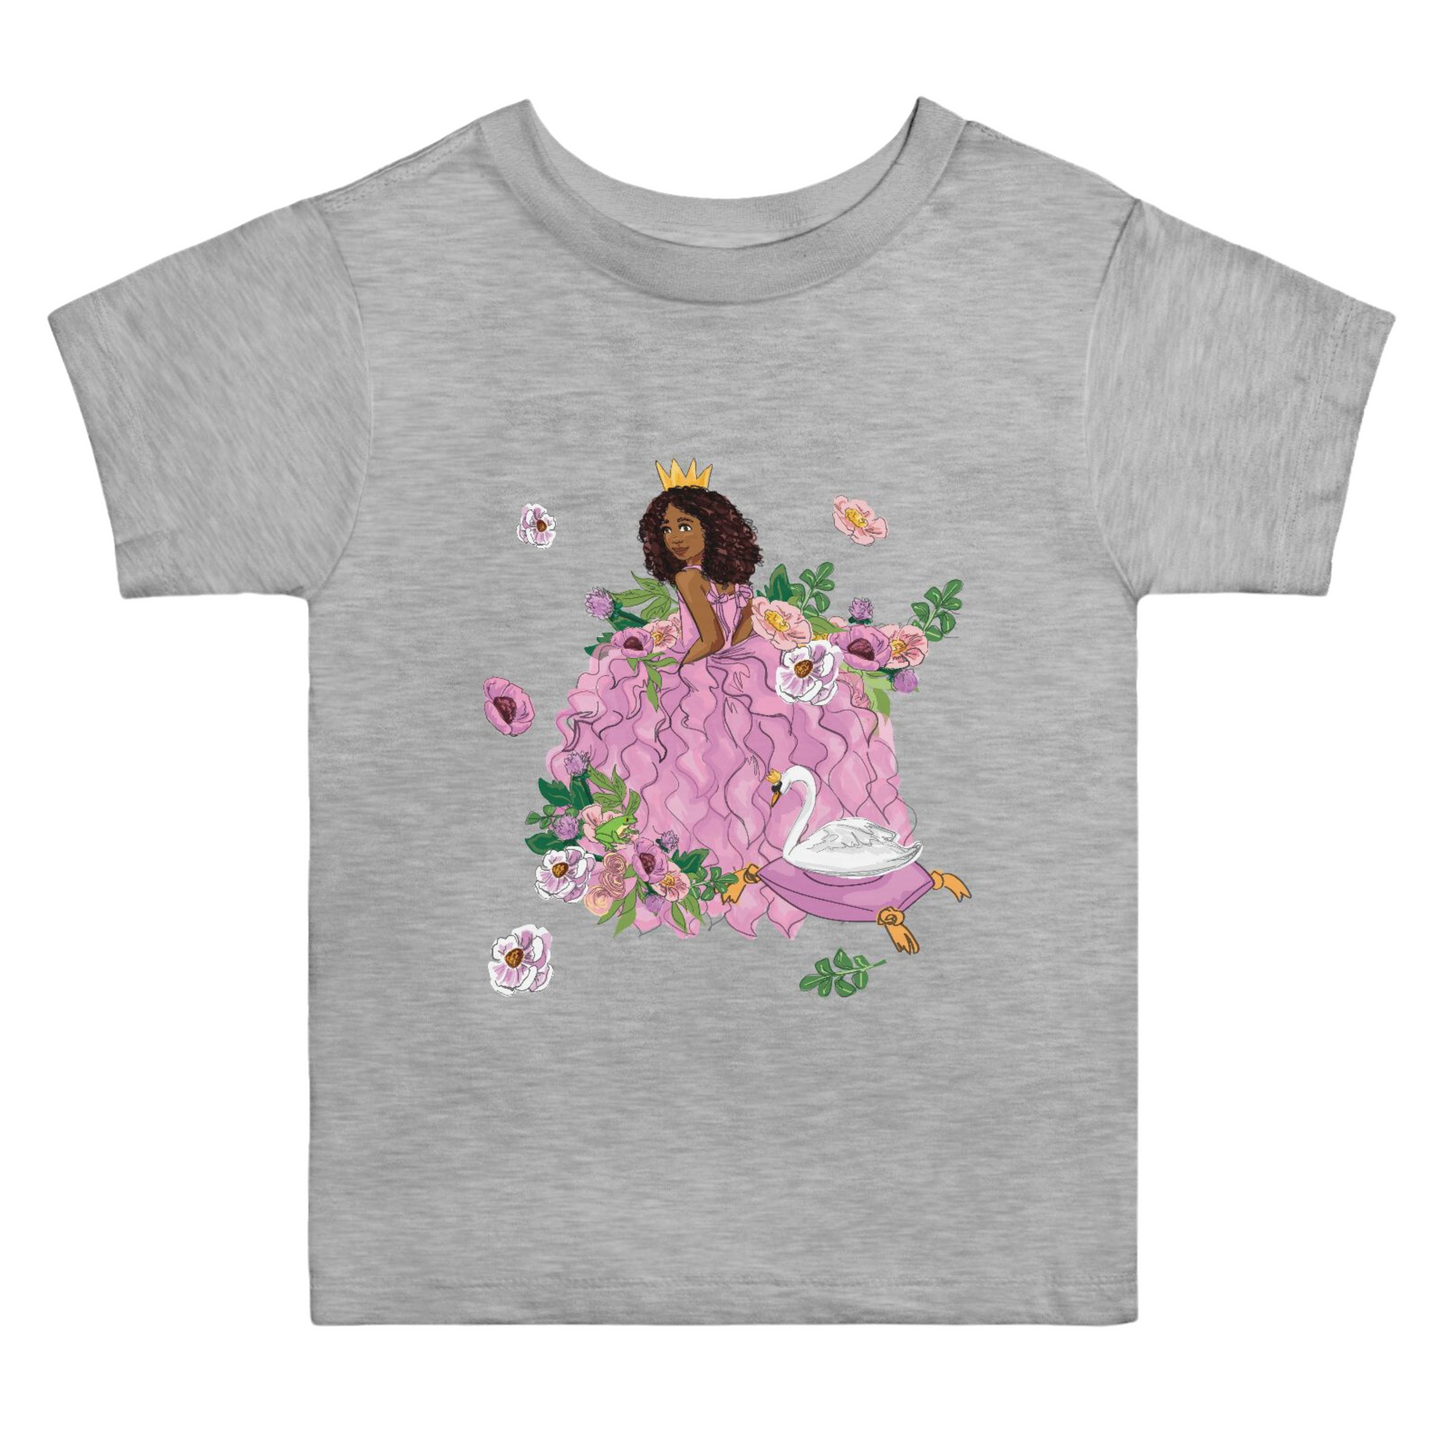 Toddler Black Princess Graphic Tee Shirt | (2T-5T)